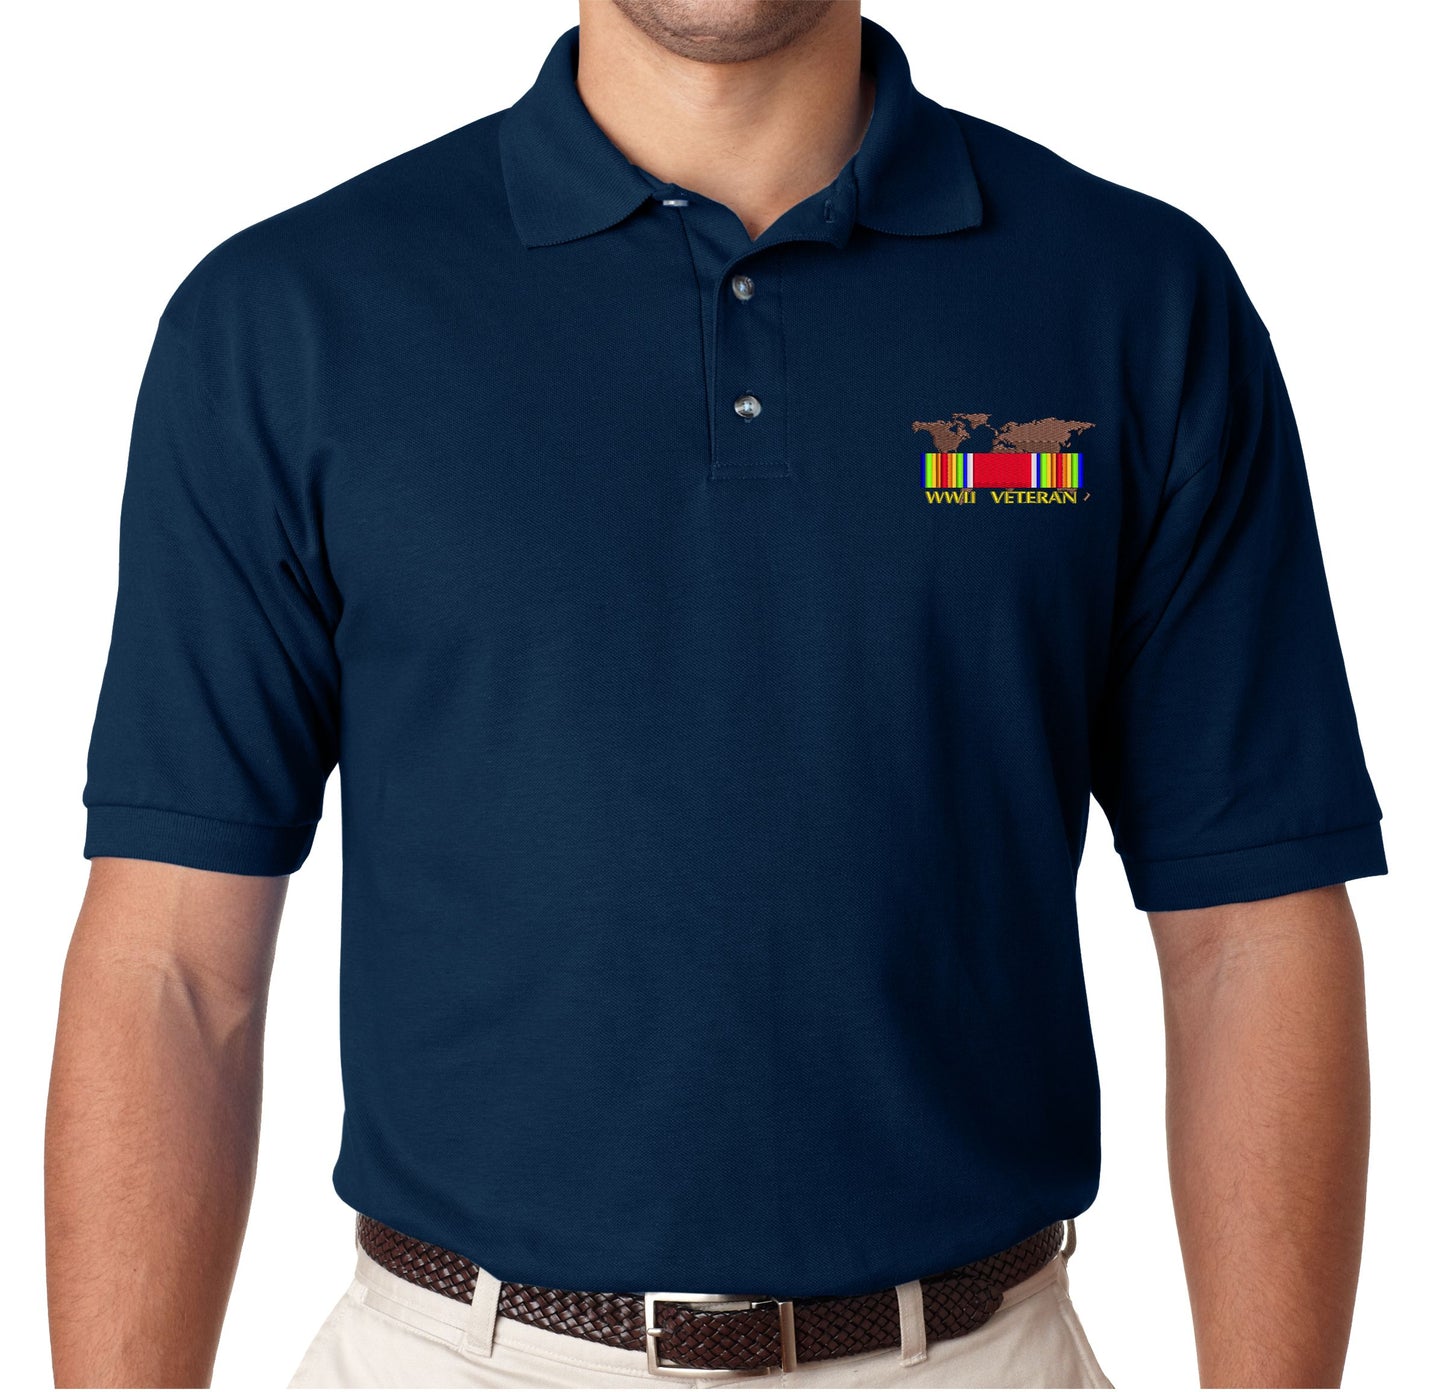 WWII Vet Polo Shirt